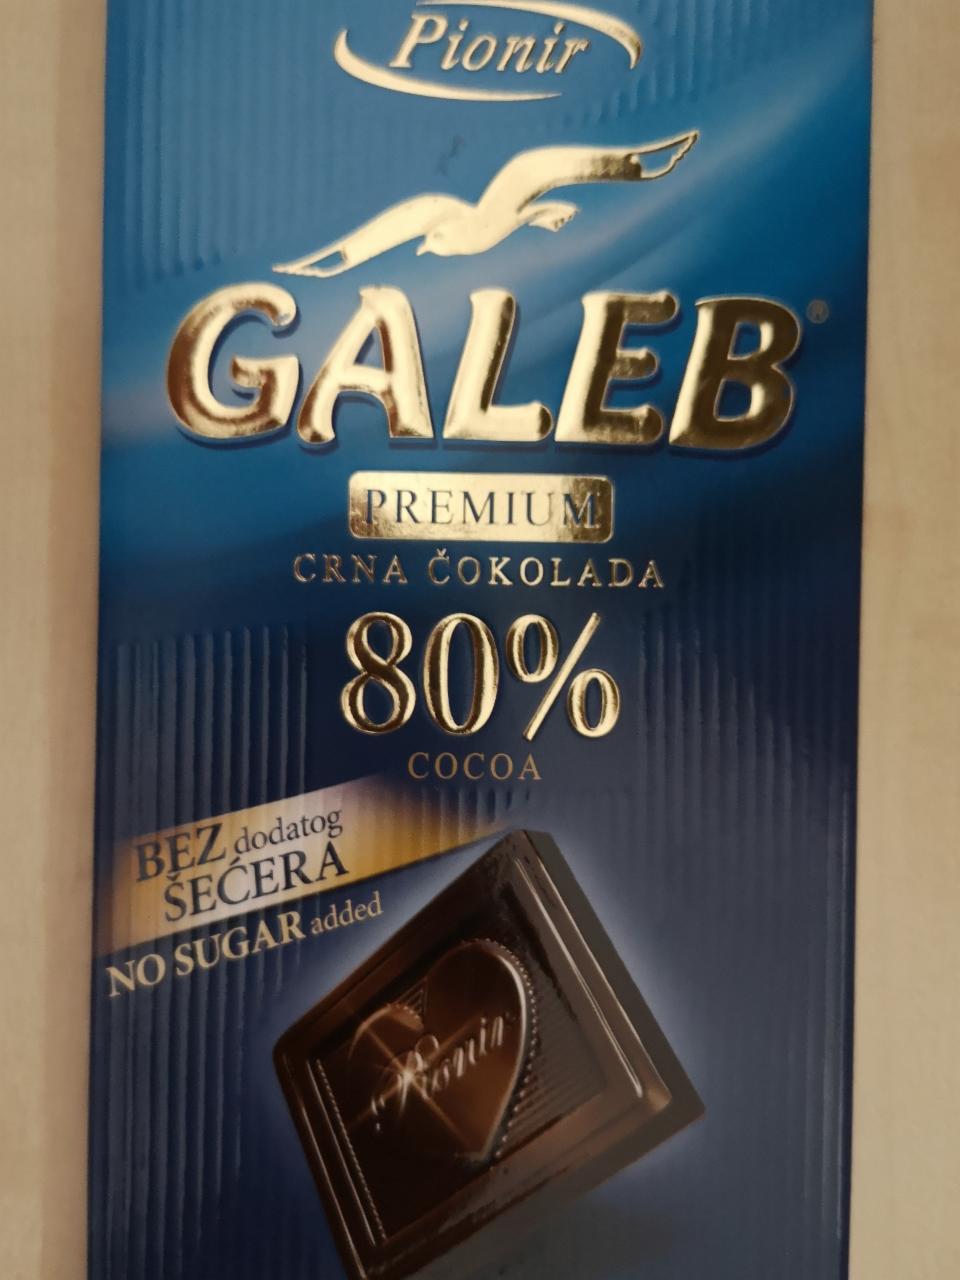 Fotografie - Galeb Premium crna čokolada 80% cocoa Pionir